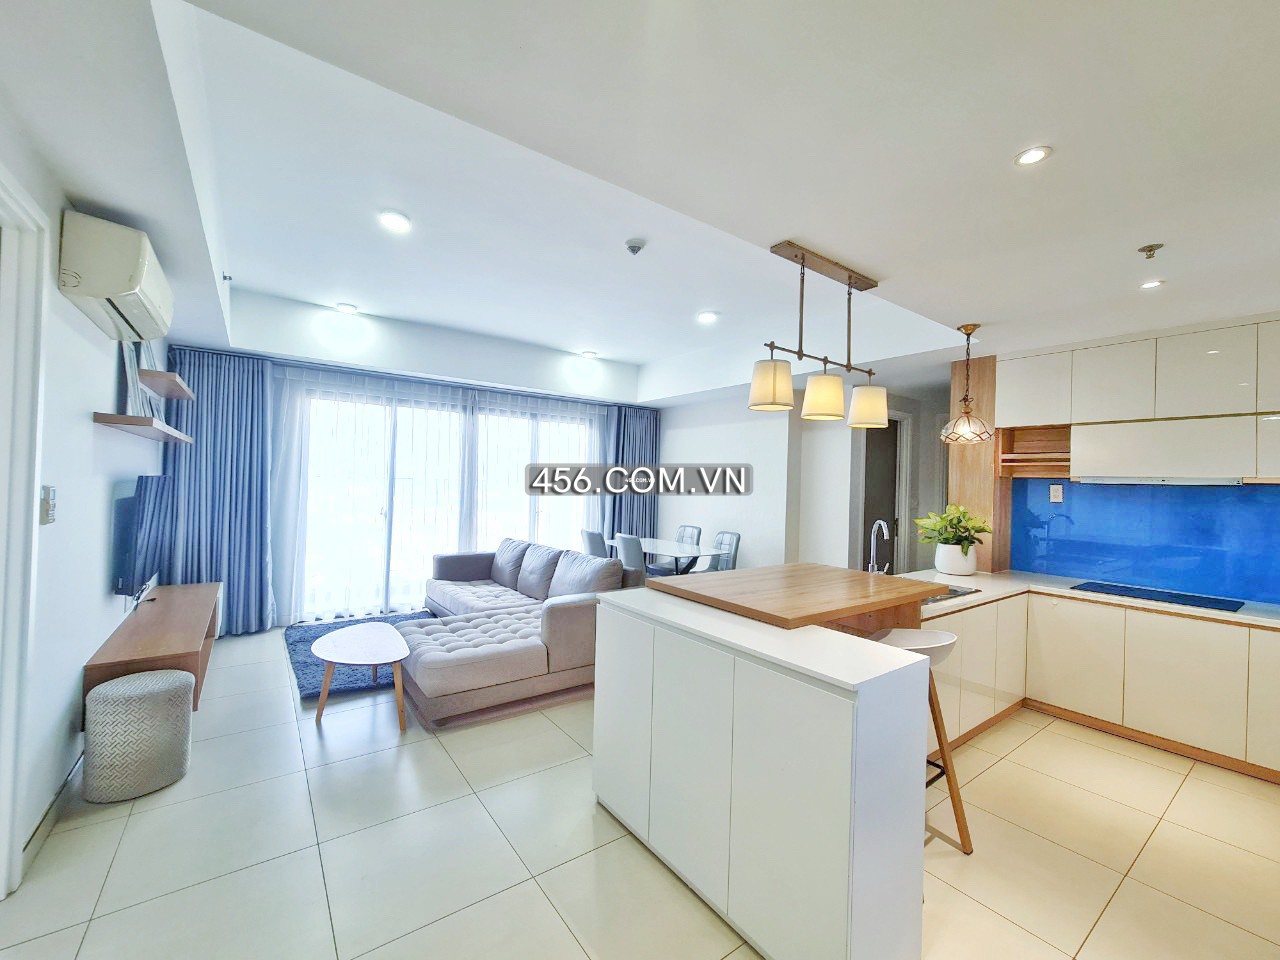 3 Bedrooms Masteri Thao Dien Apartment For...